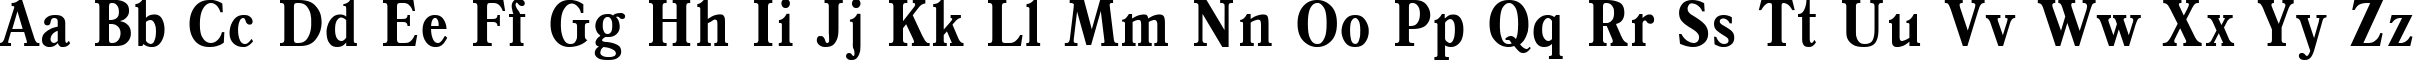 Пример написания английского алфавита шрифтом Antiqua Bold85b